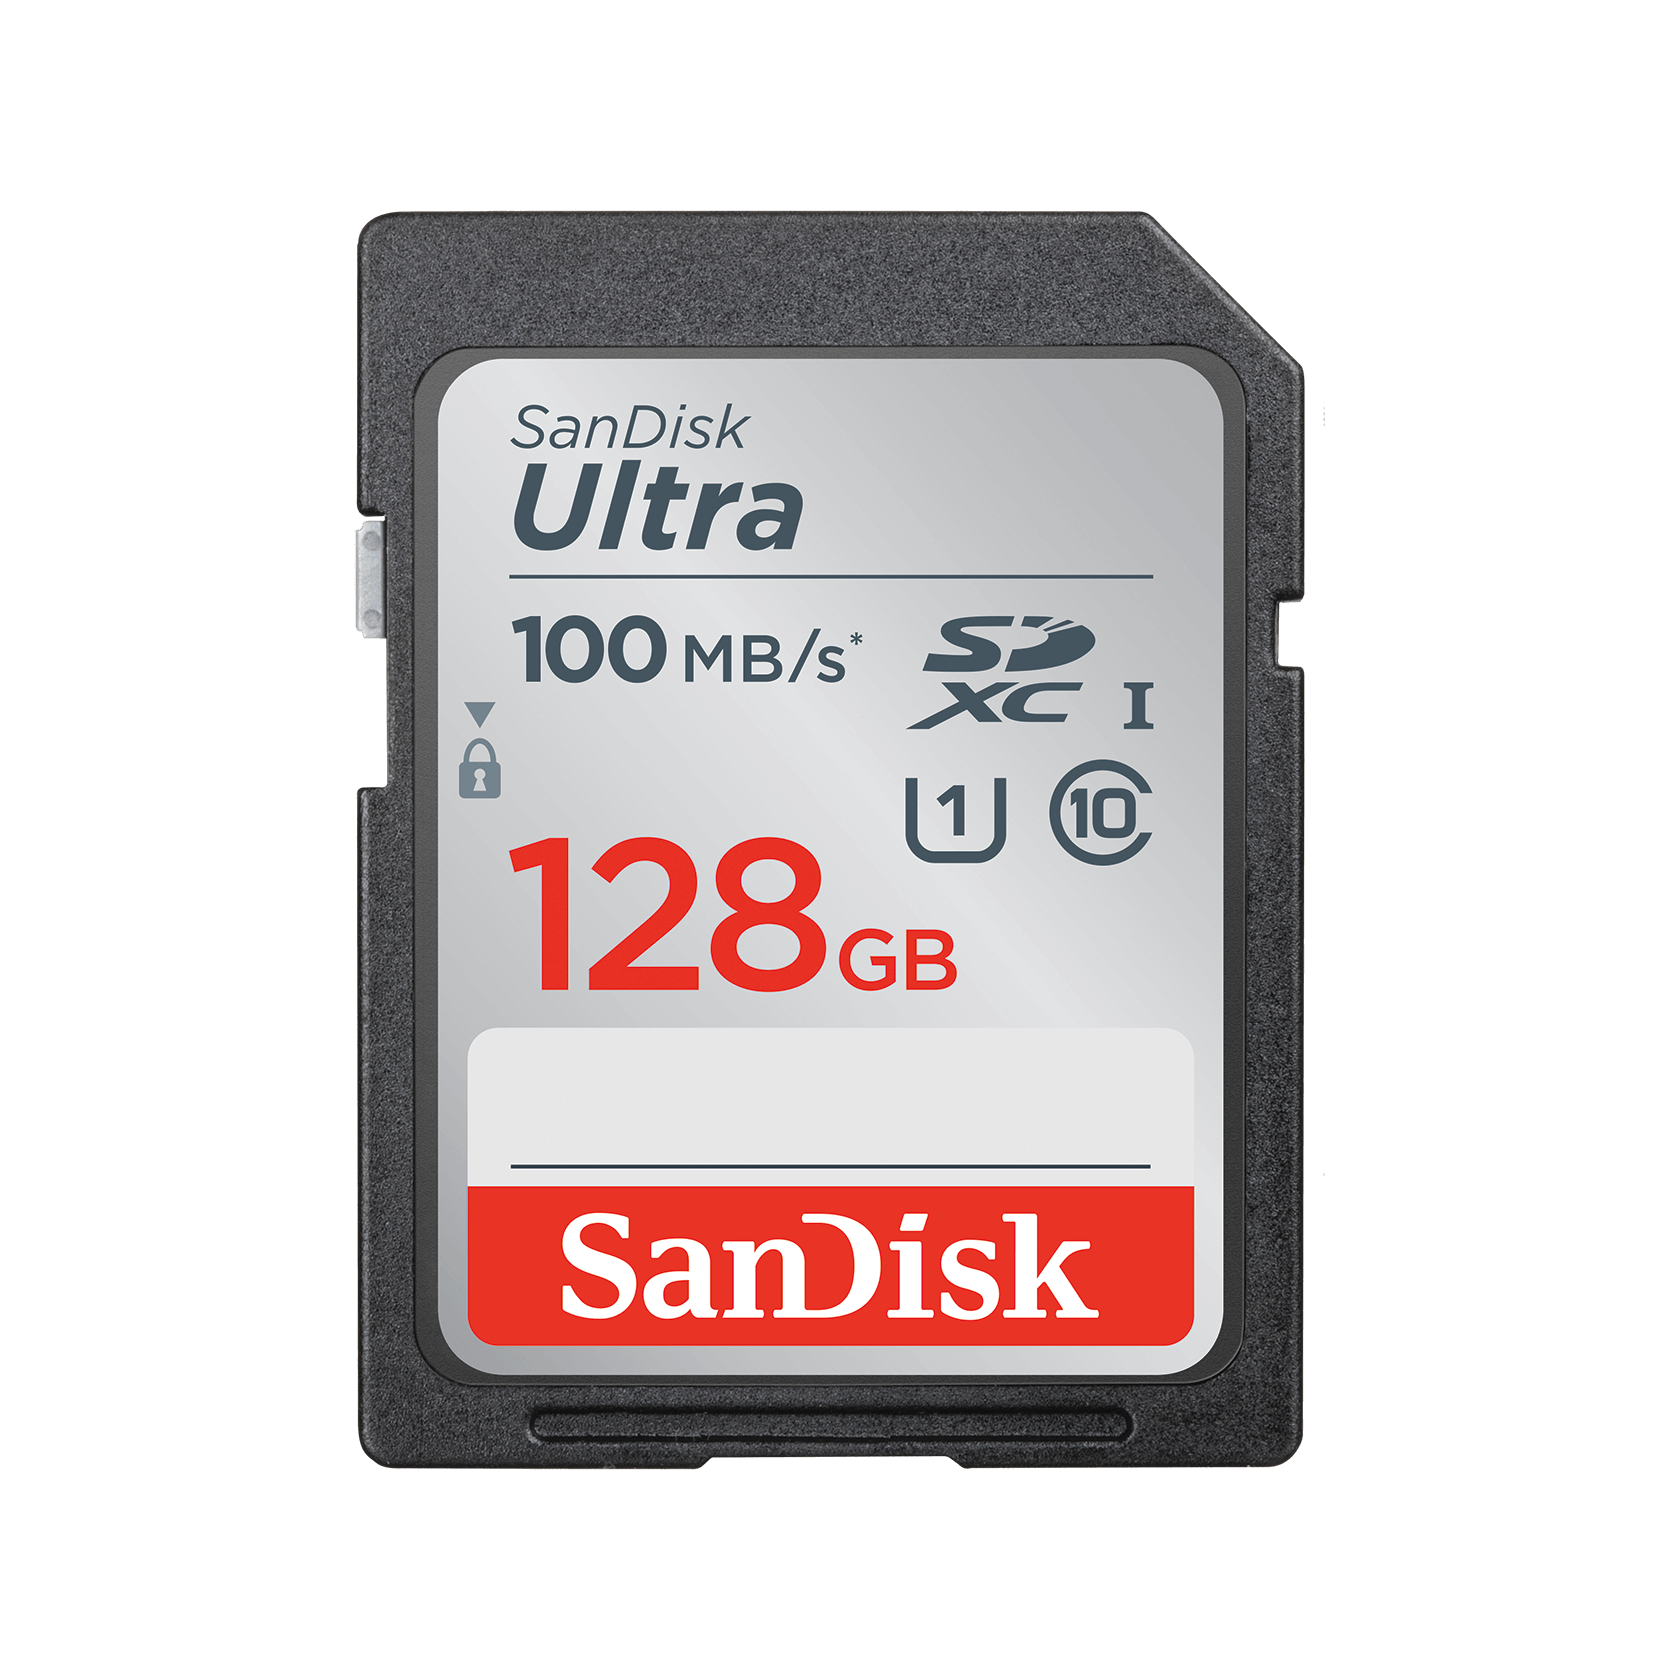 SanDisk Ultra SDHC/SDXC Memory Card 128GB - SDSDUNR-128G-AN6IN